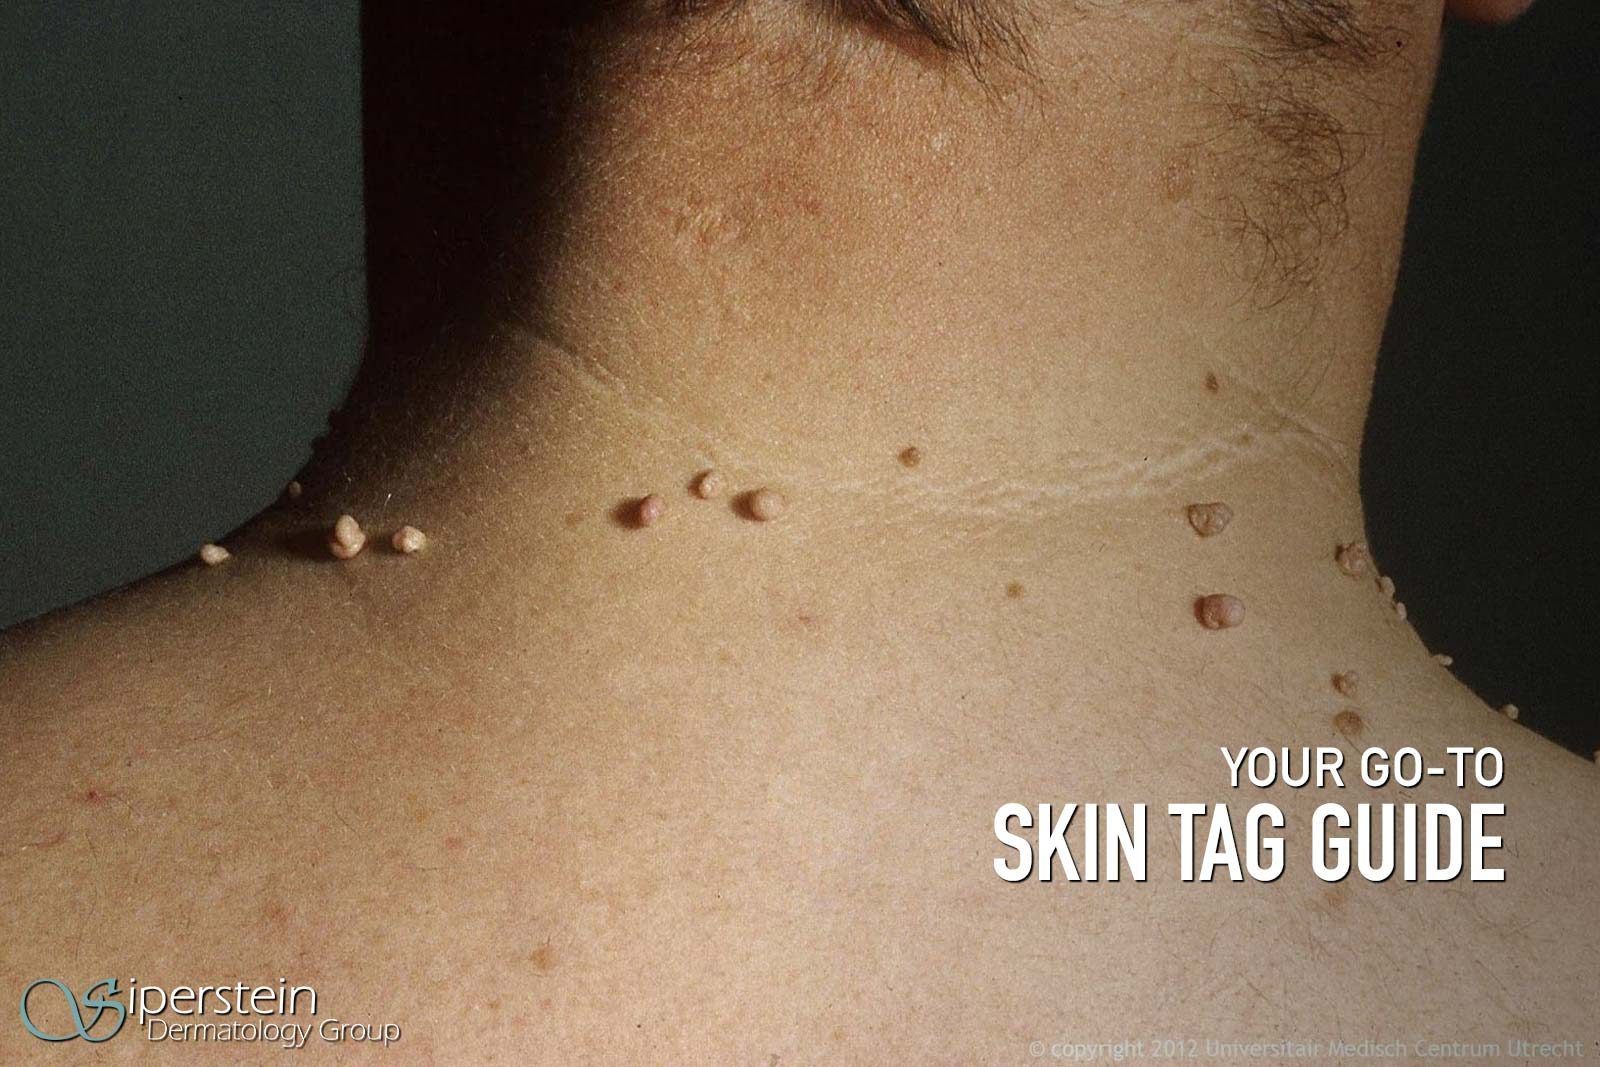 Skin tag